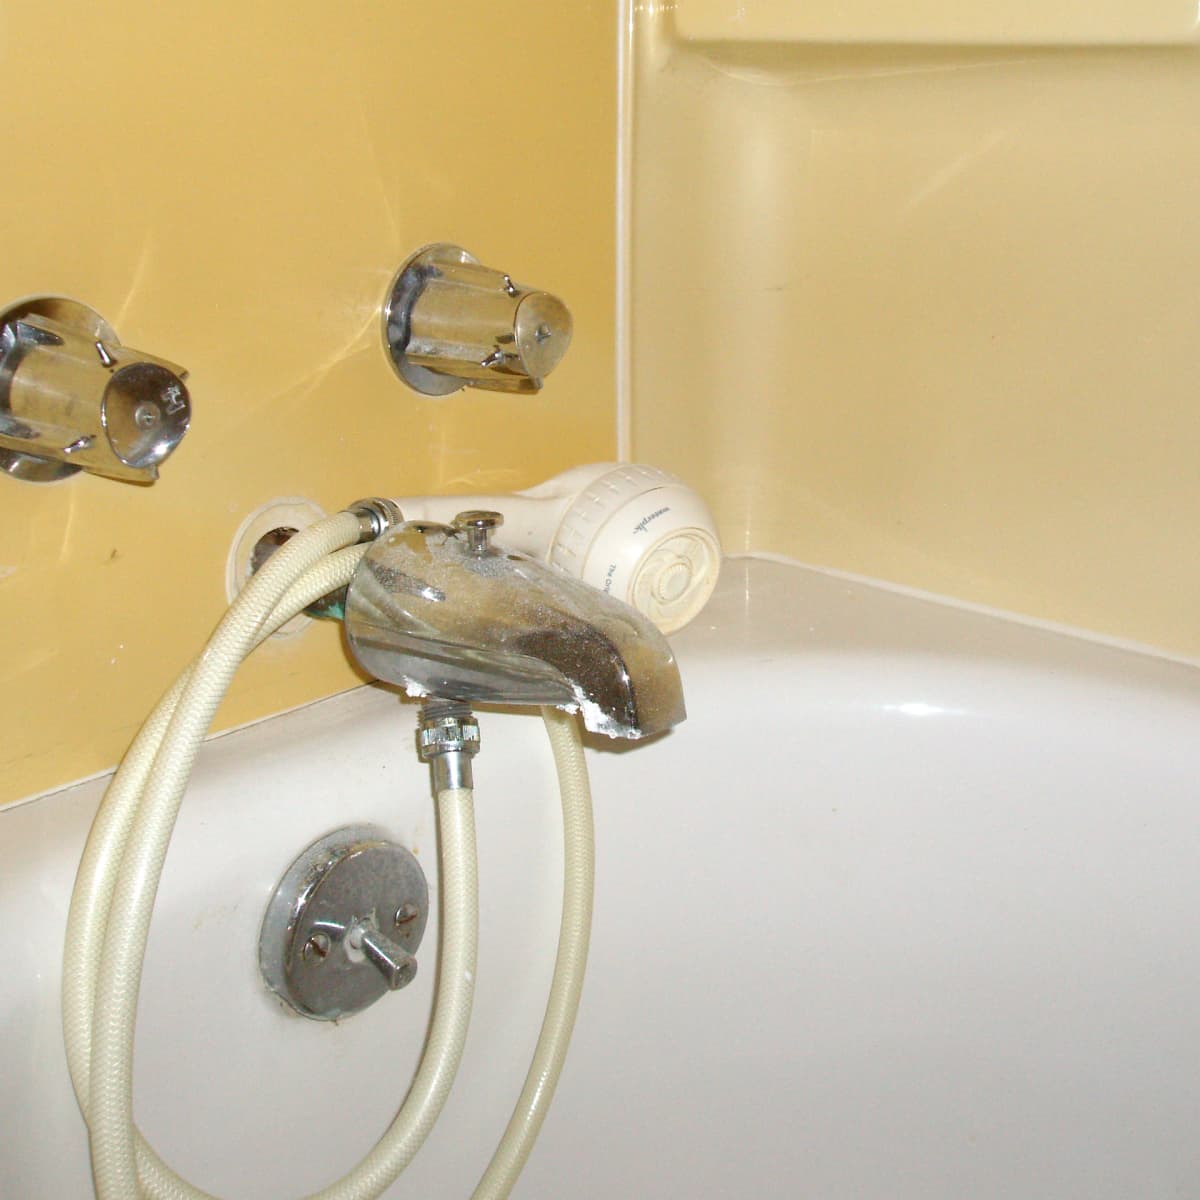 Handheld Showerheads, Shower Adapter For Bathtub Faucet